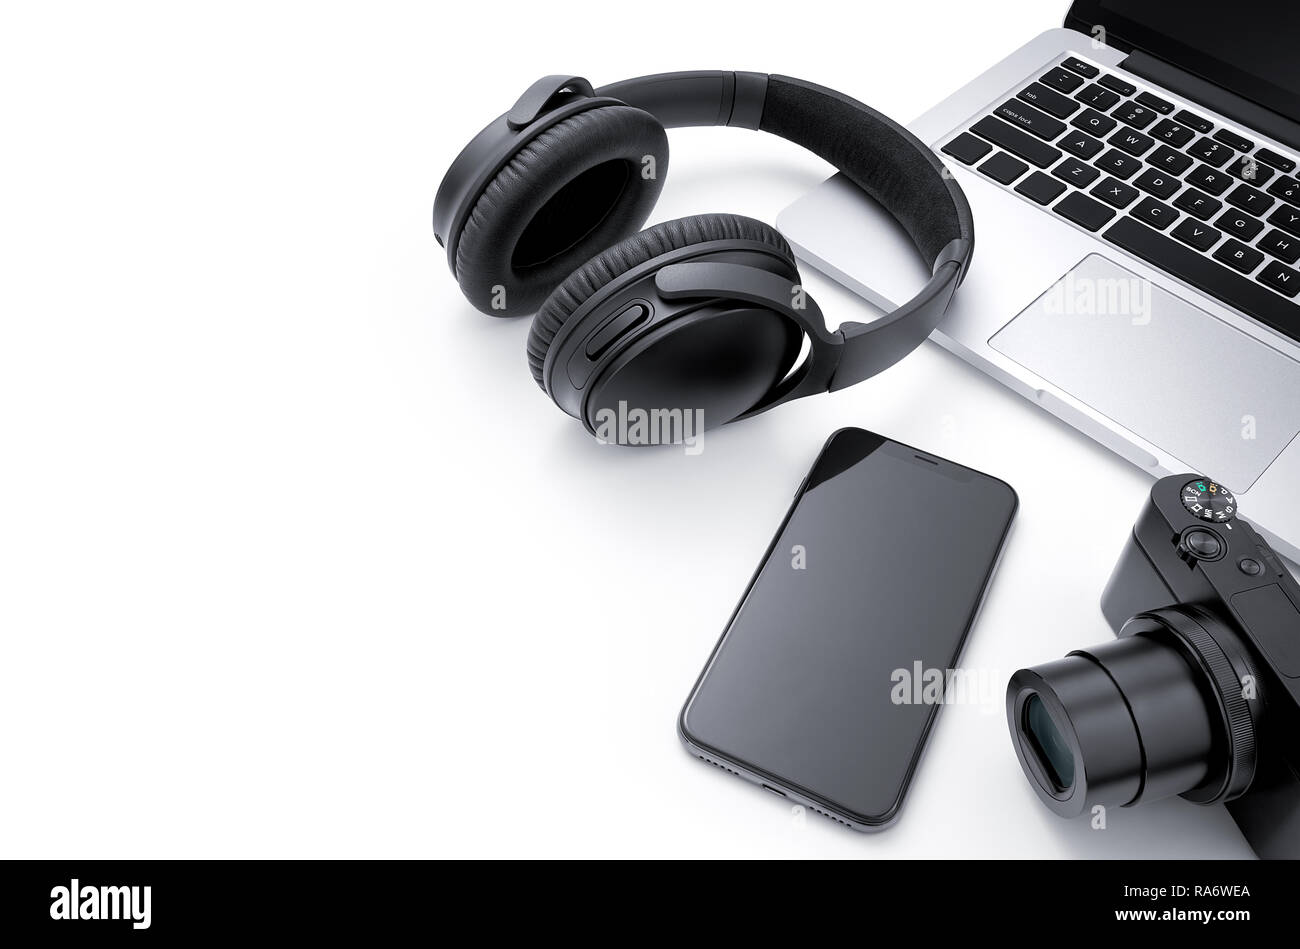 Electronic device - Laptop, smartphone, camera and headphone isolated on white background Stock Photo